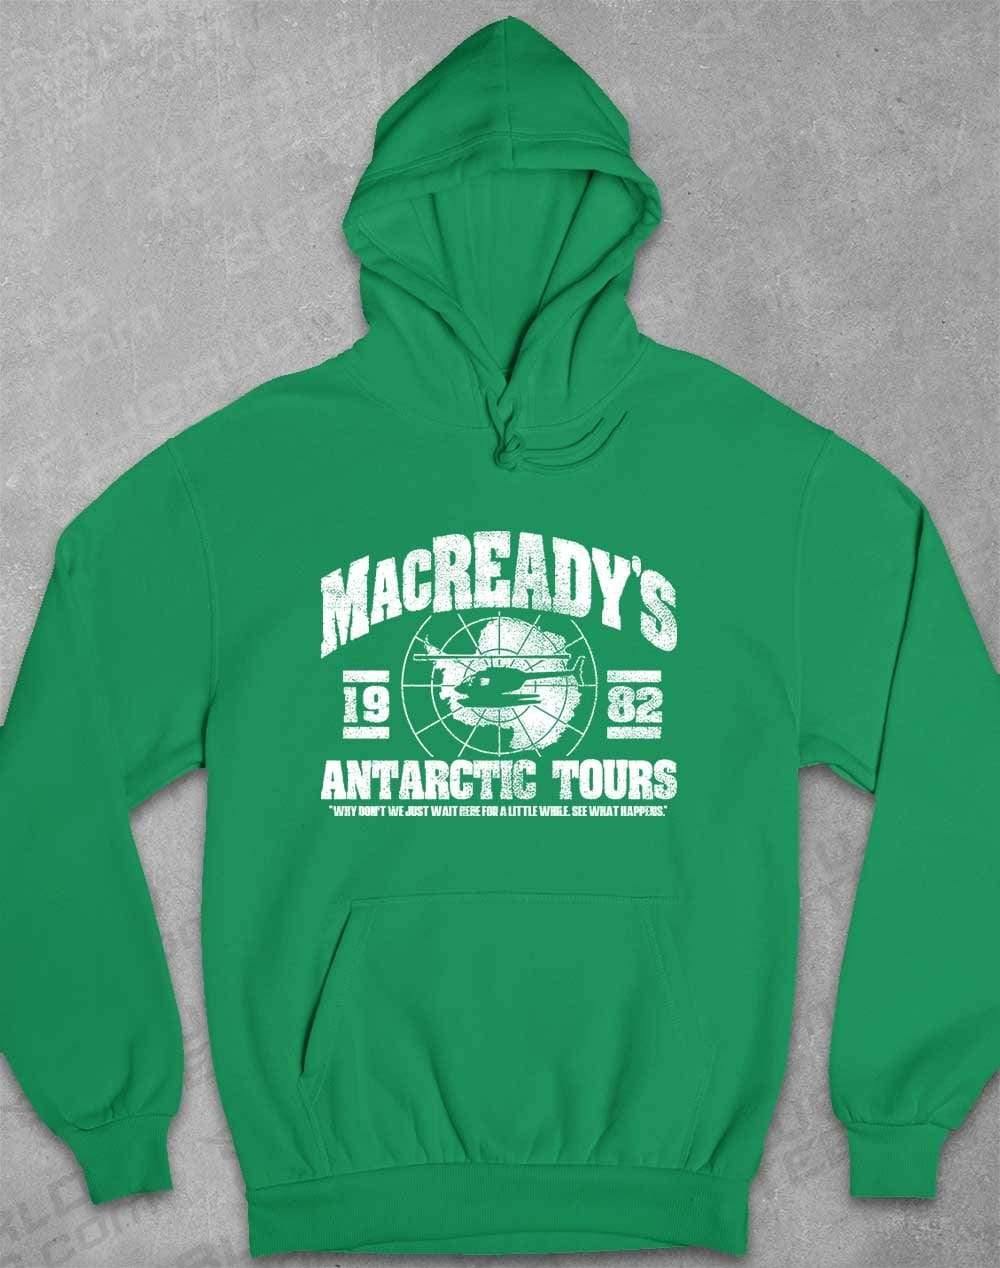 MacReady's Antarctic Tours 1982 Hoodie XS / Irish Green  - Off World Tees